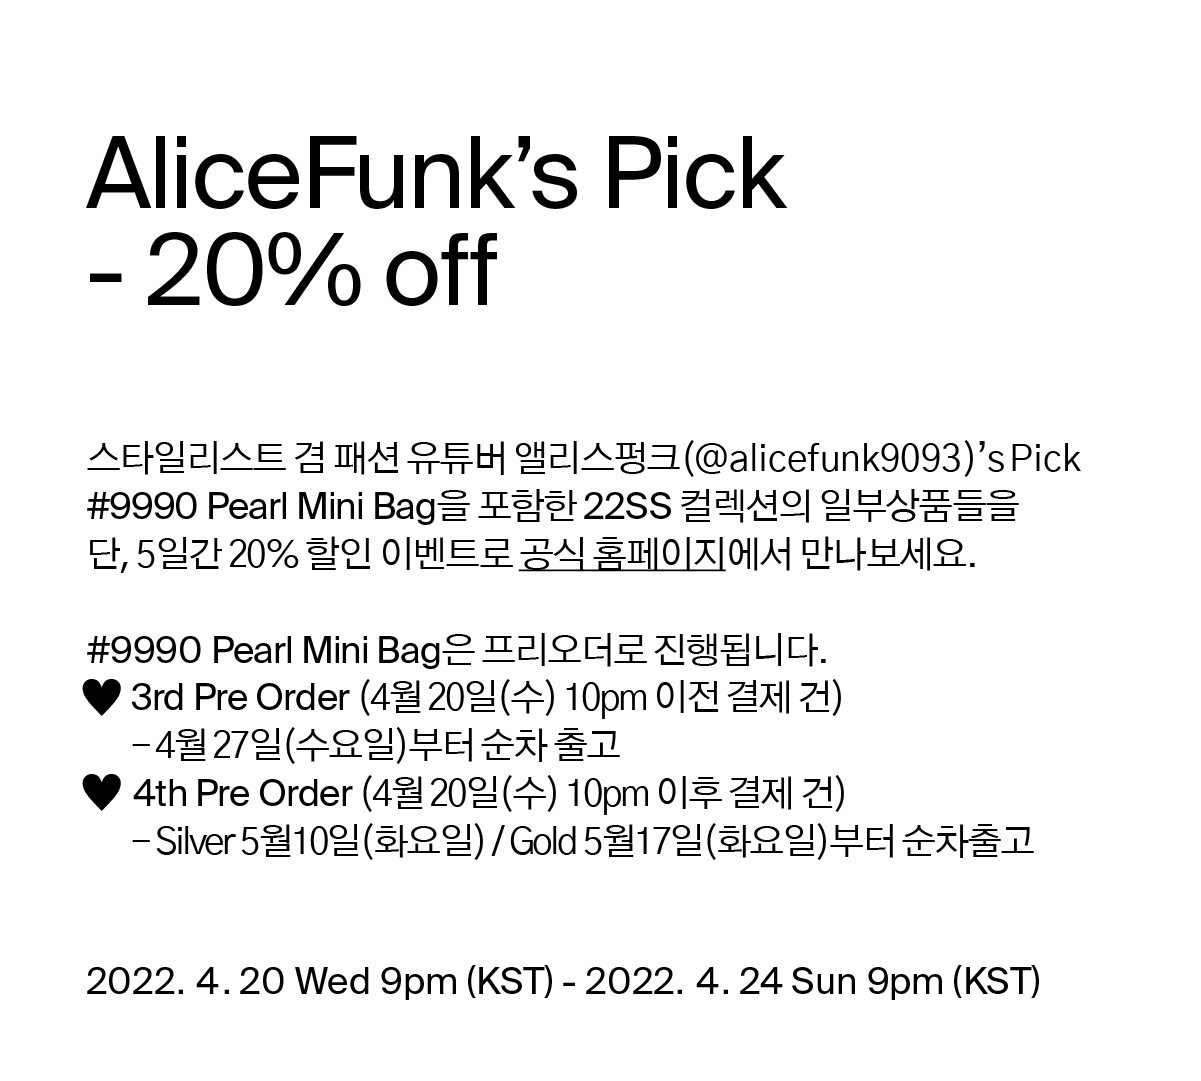 AliceFunksPick gett 20% off